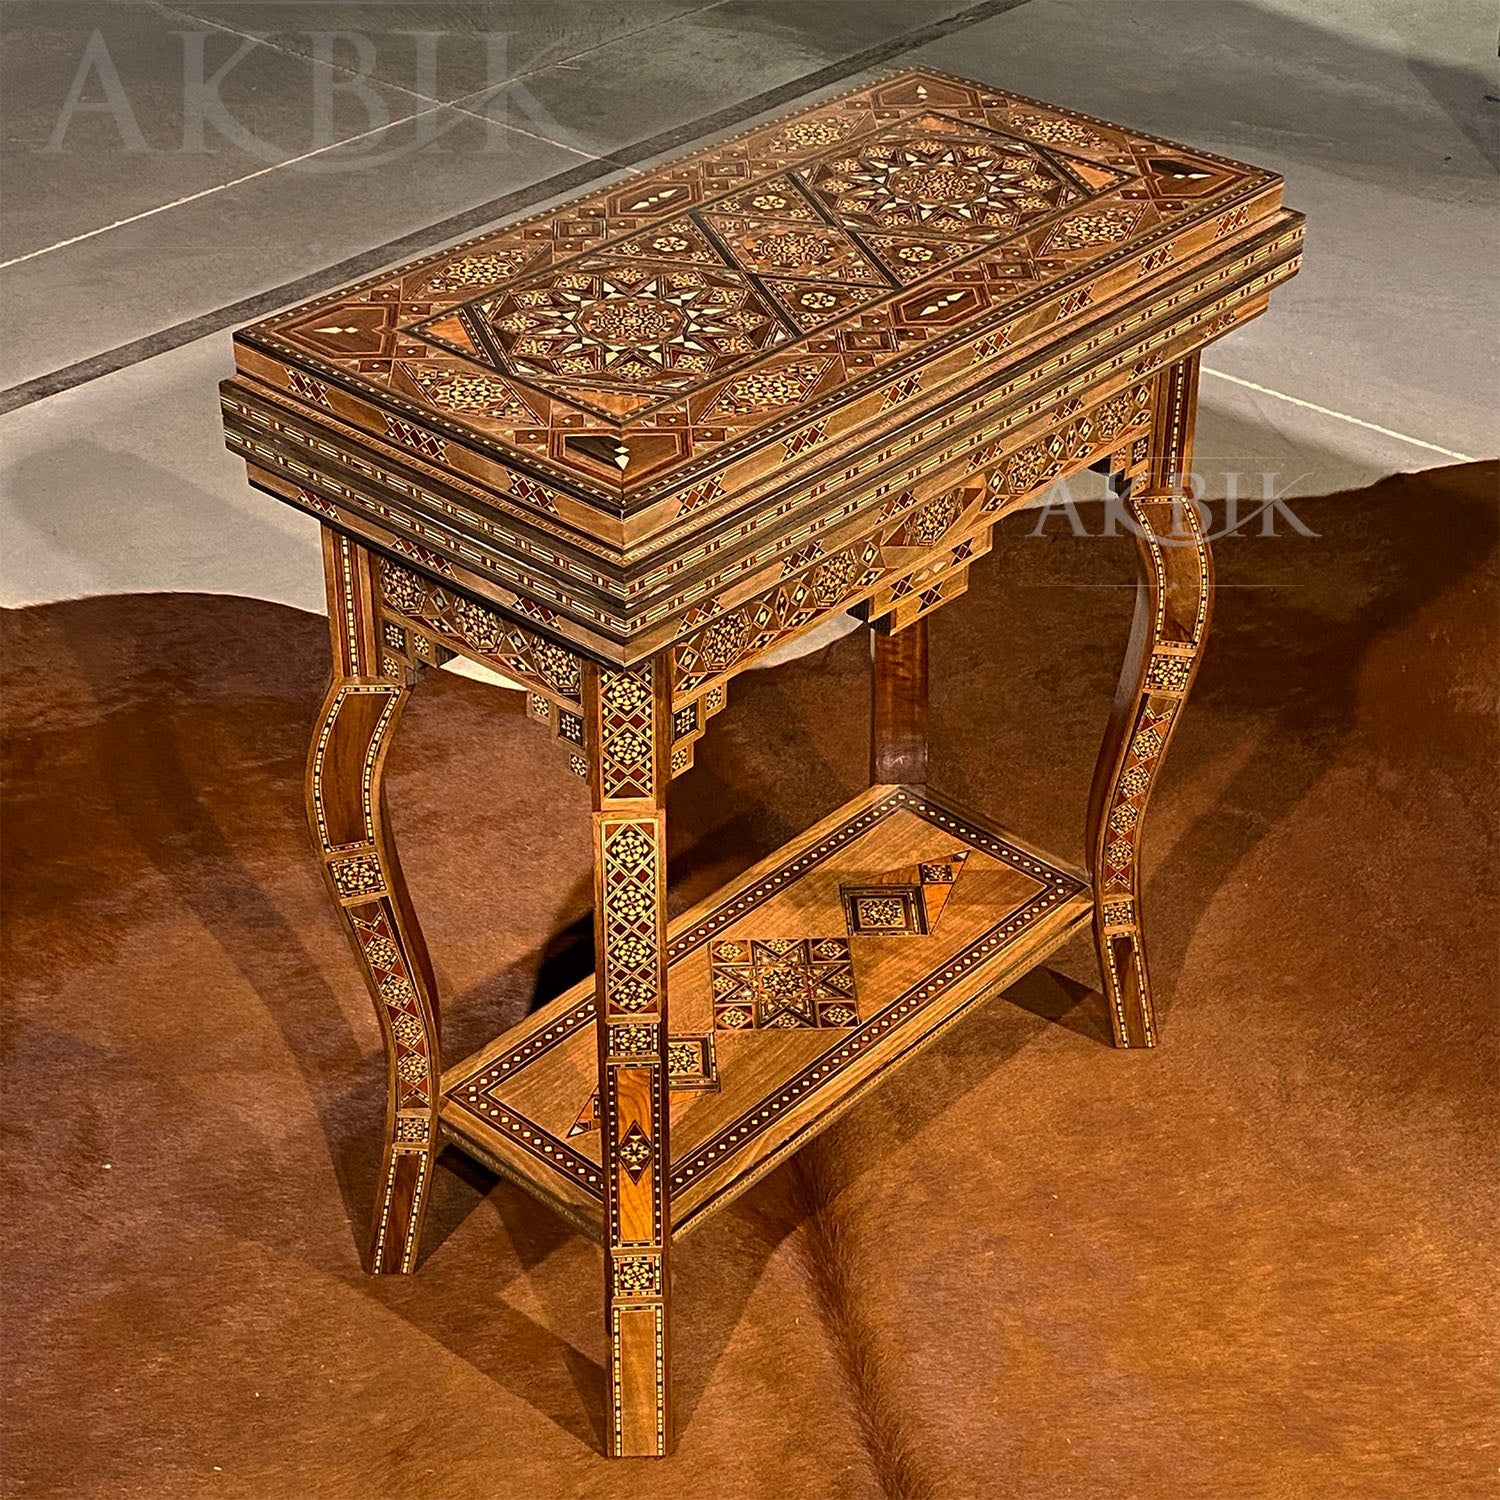 Levantine Mosaic Backgamoon Table Set - AKBIK Furniture & Design